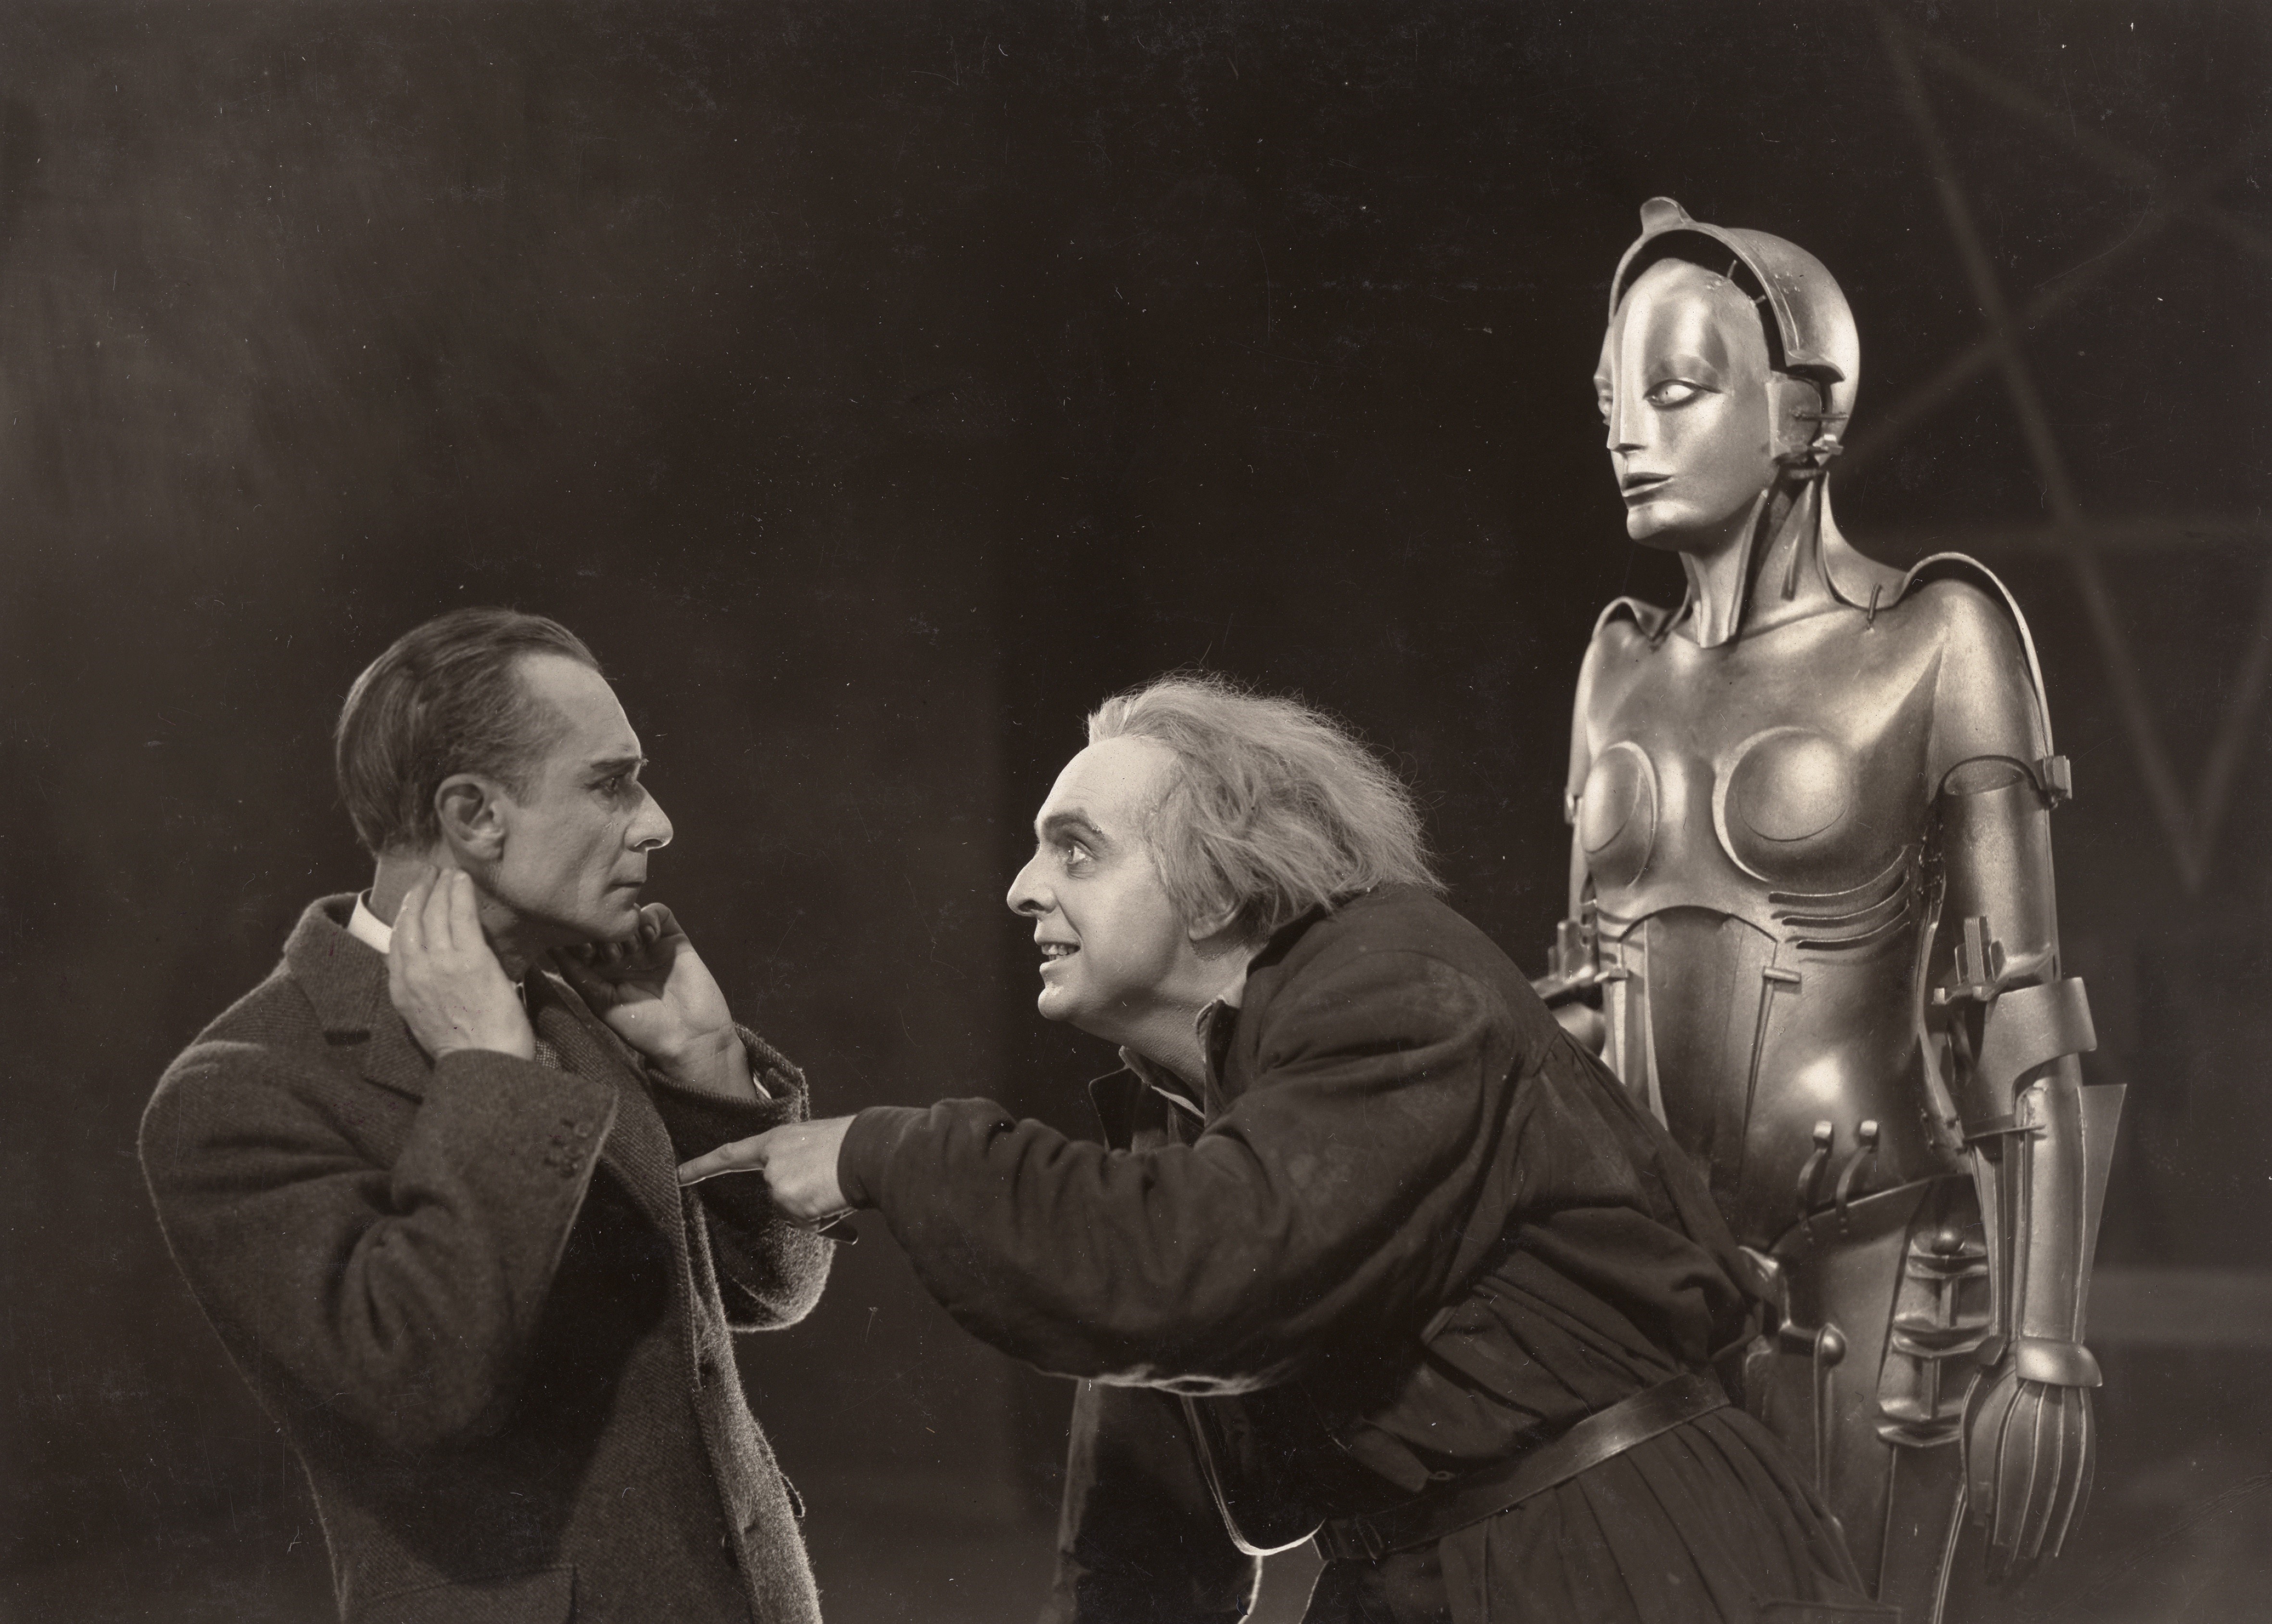 Gli attori Alfred Abel et Rudolf Klein-Rogge in una scena di Metropolis, 1927